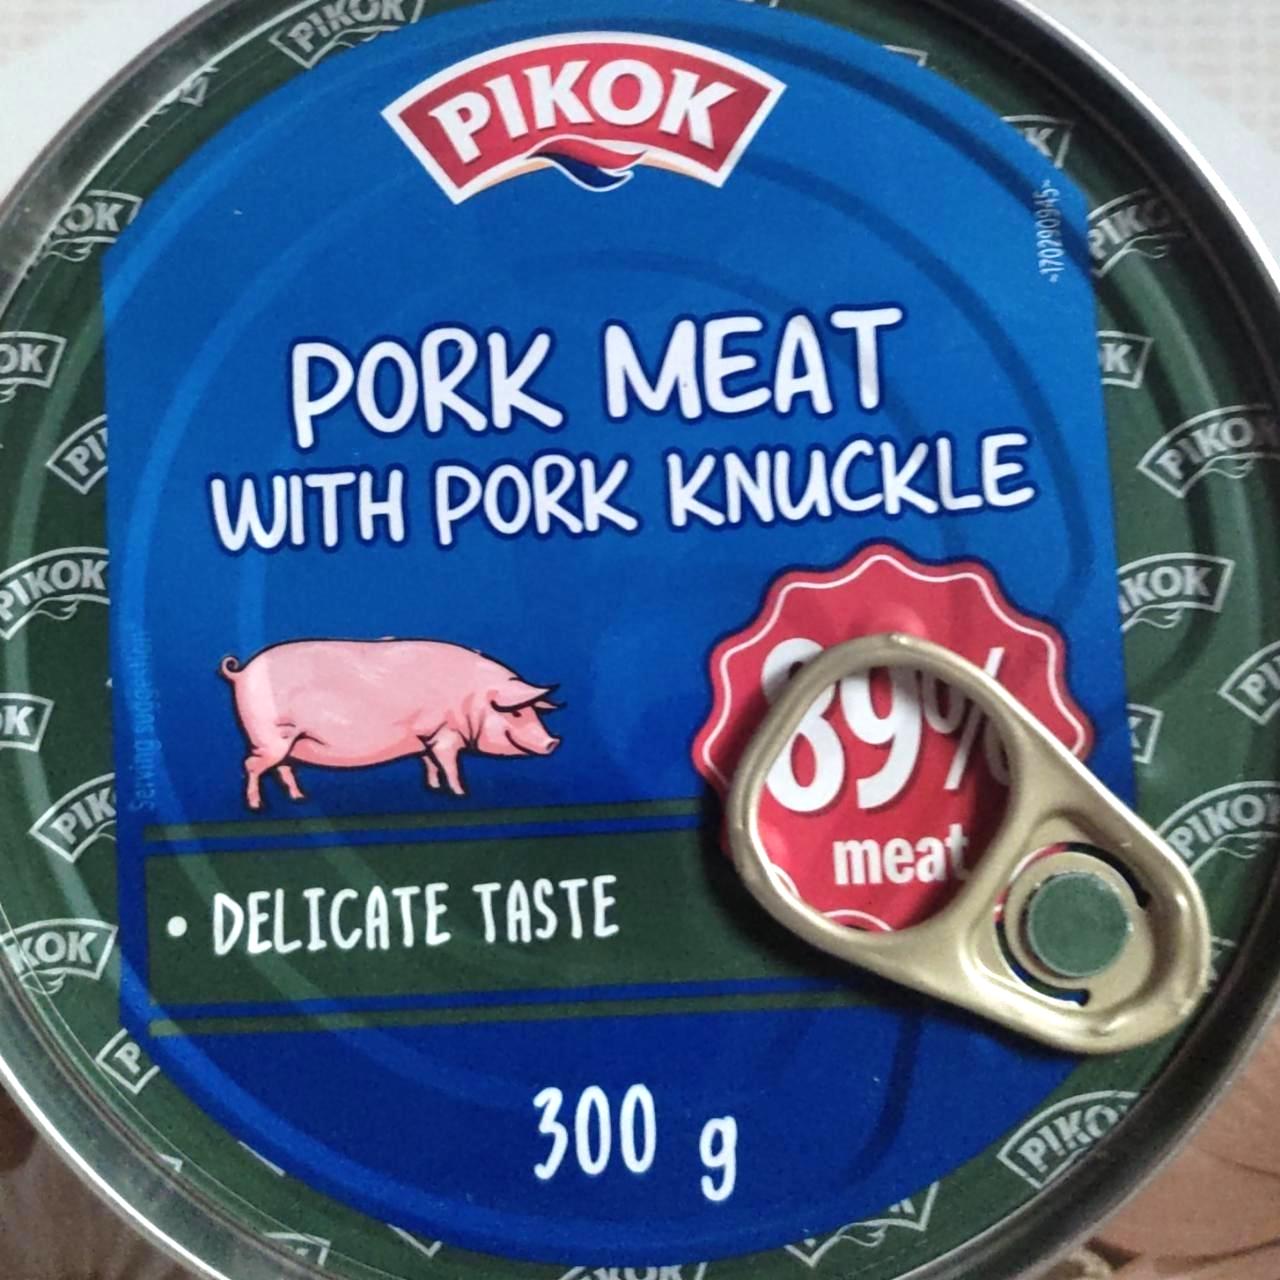 Képek - Pork meat with pork knuckle Pikok